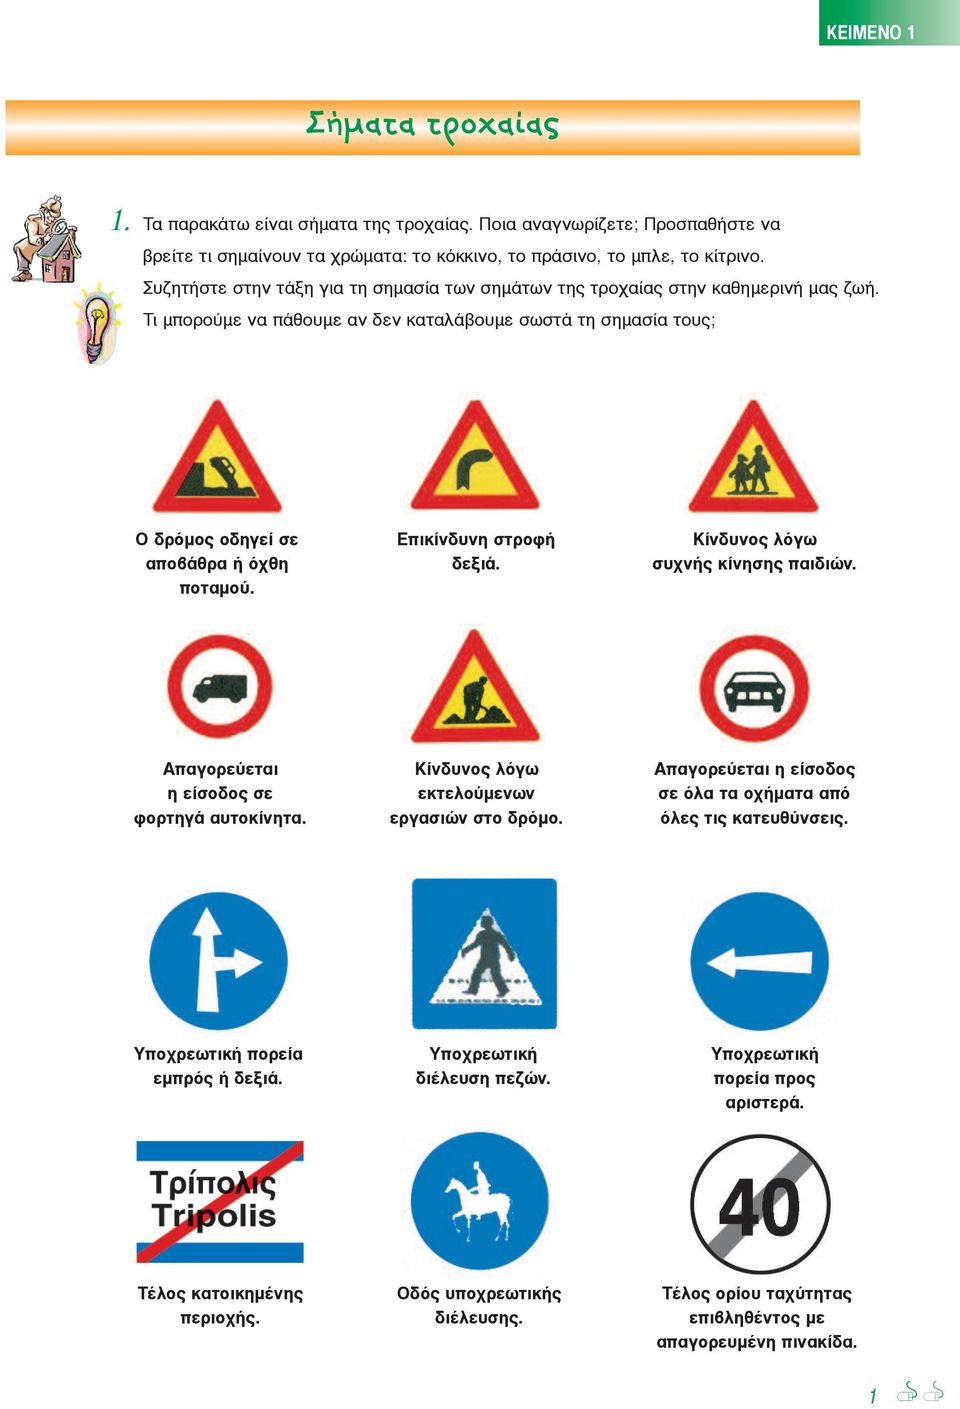 Eπικίνδυνη στροφή δεξιά. Kίνδυνος λόγω συχνής κίνησης παιδιών. Aπαγορεύεται η είσοδος σε φορτηγά αυτοκίνητα. Kίνδυνος λόγω εκτελούμενων εργασιών στο δρόμο.